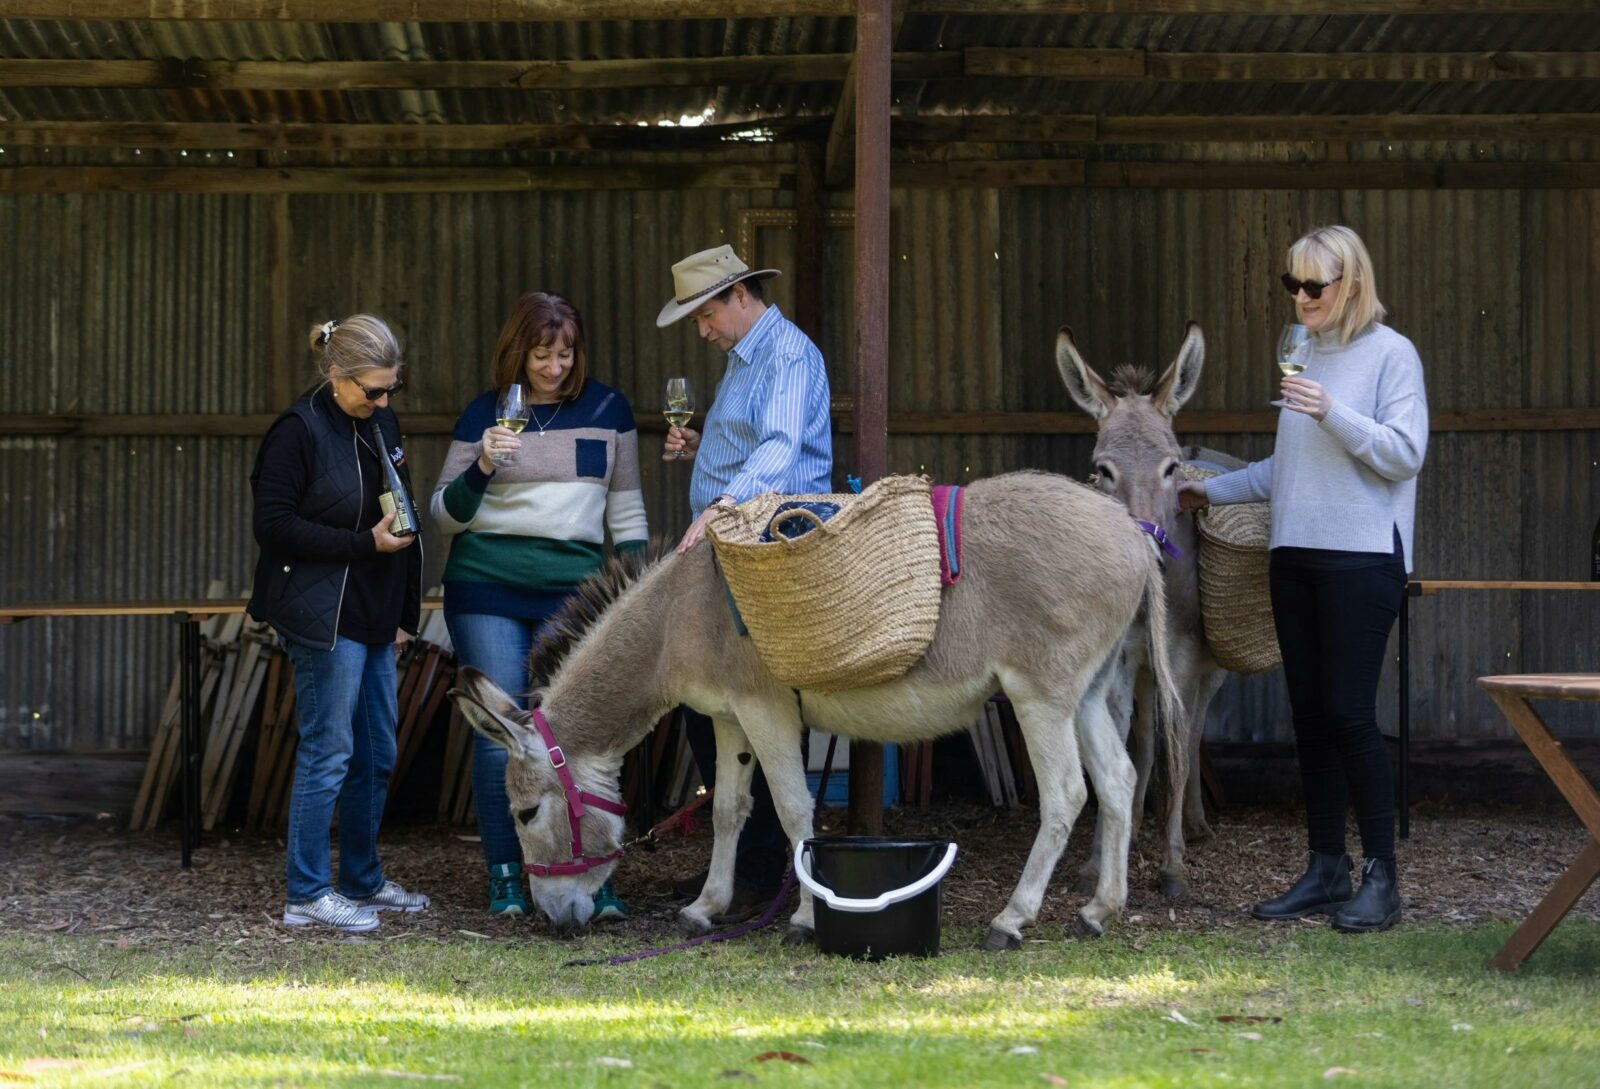 People enjoying wine tasting accompanied by two donkeys